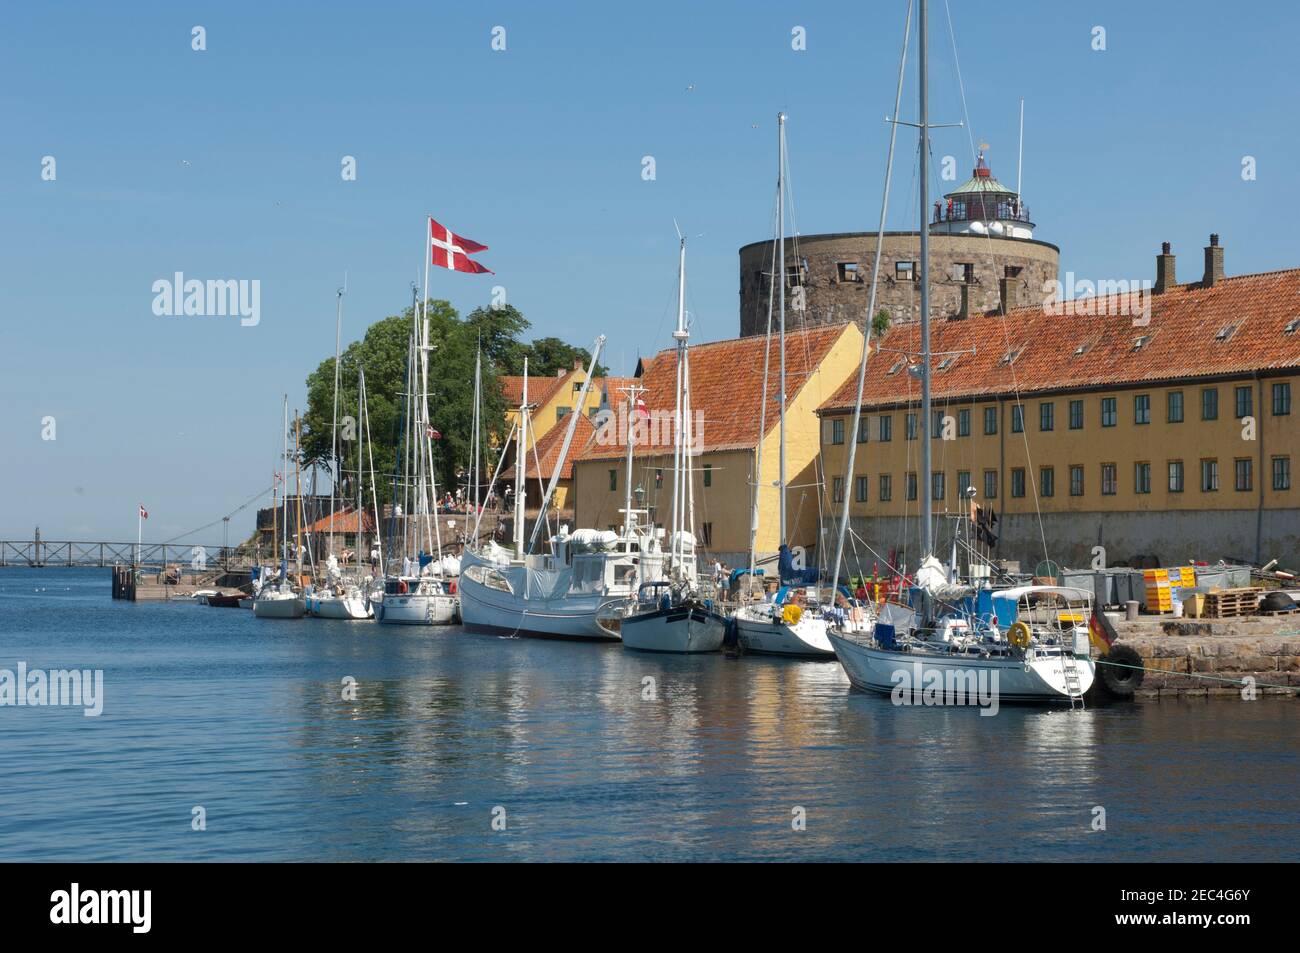 The harbor on the Danish island of Christiansö. Stock Photo